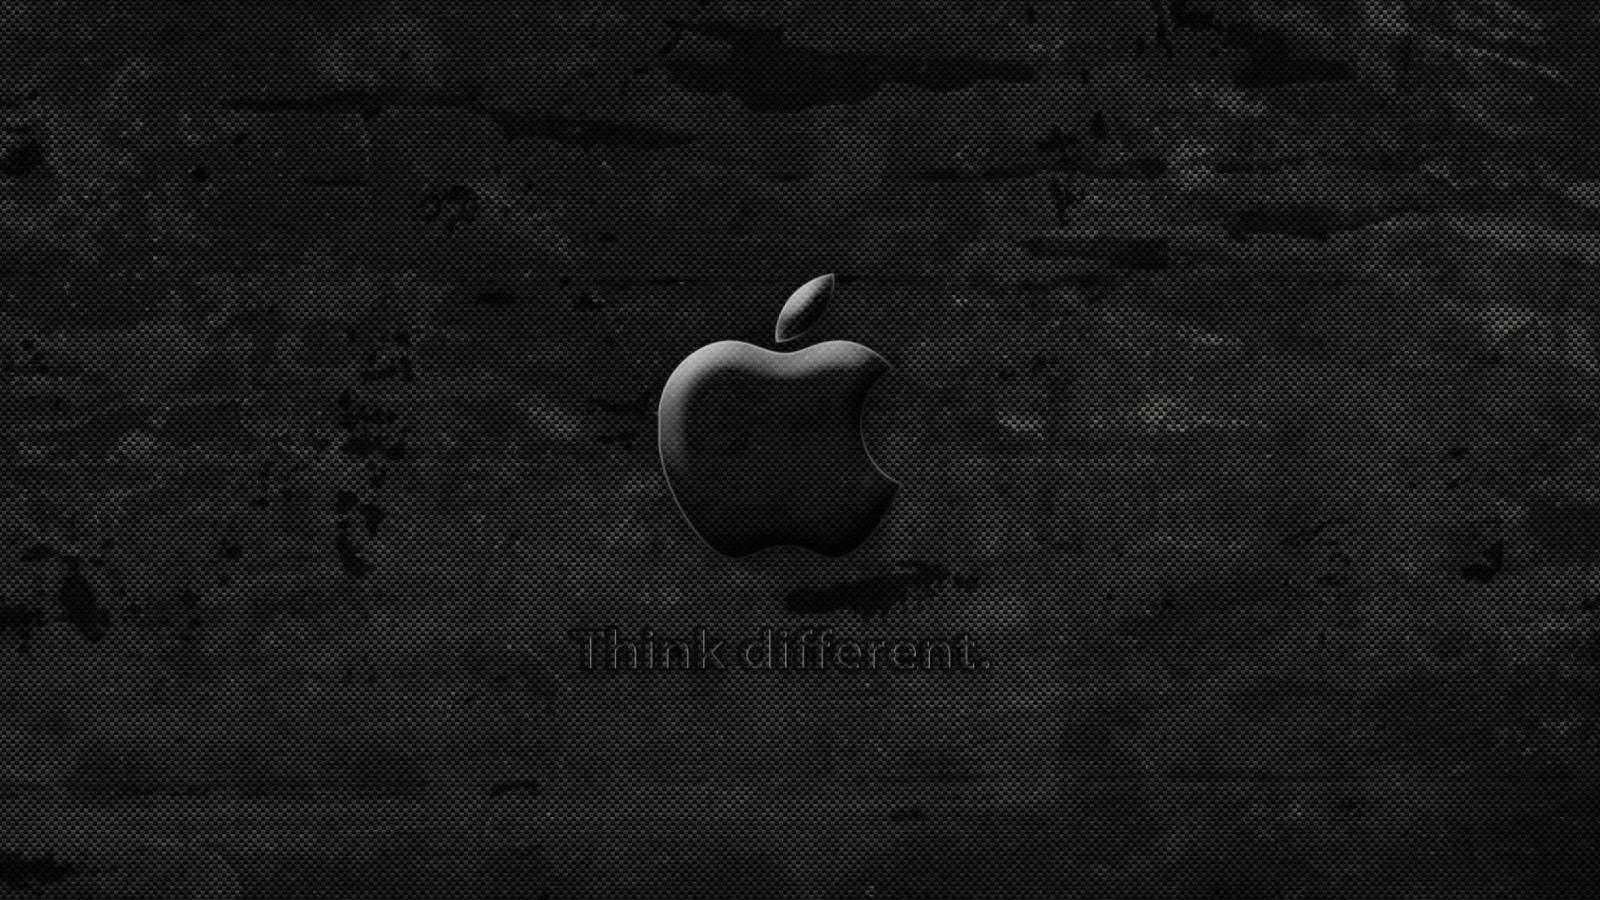 Dark Apple wallpaper 1600x900